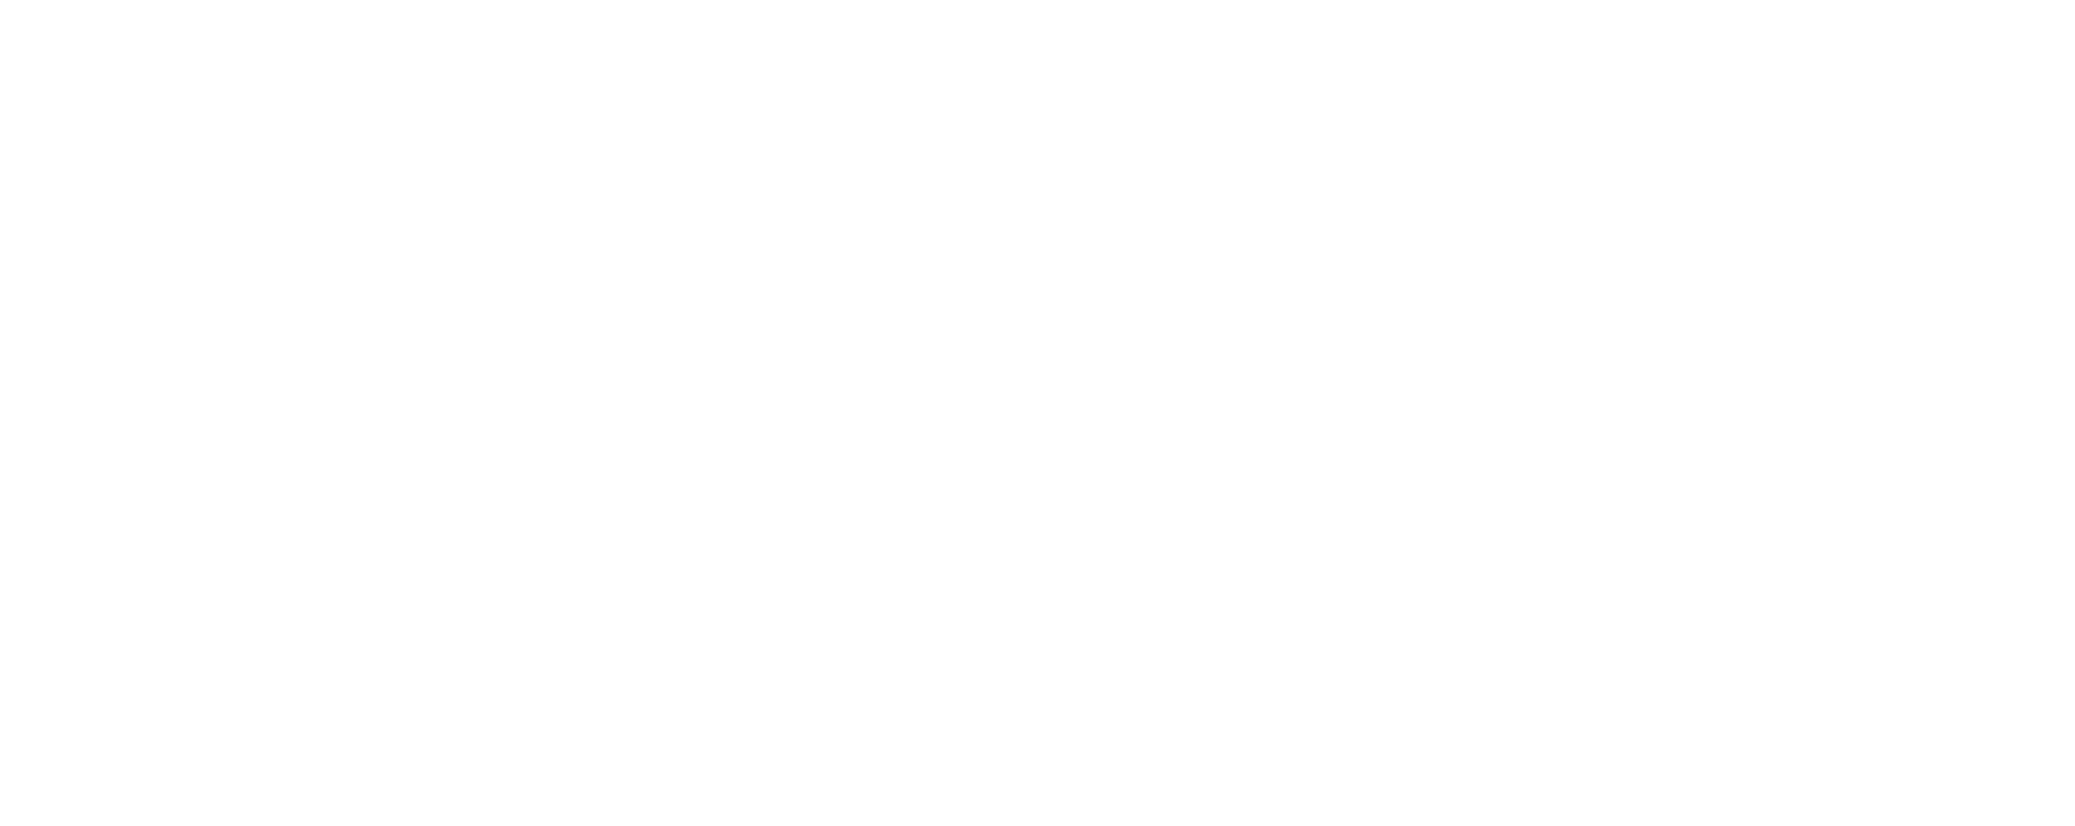 Zion Hill Exotics